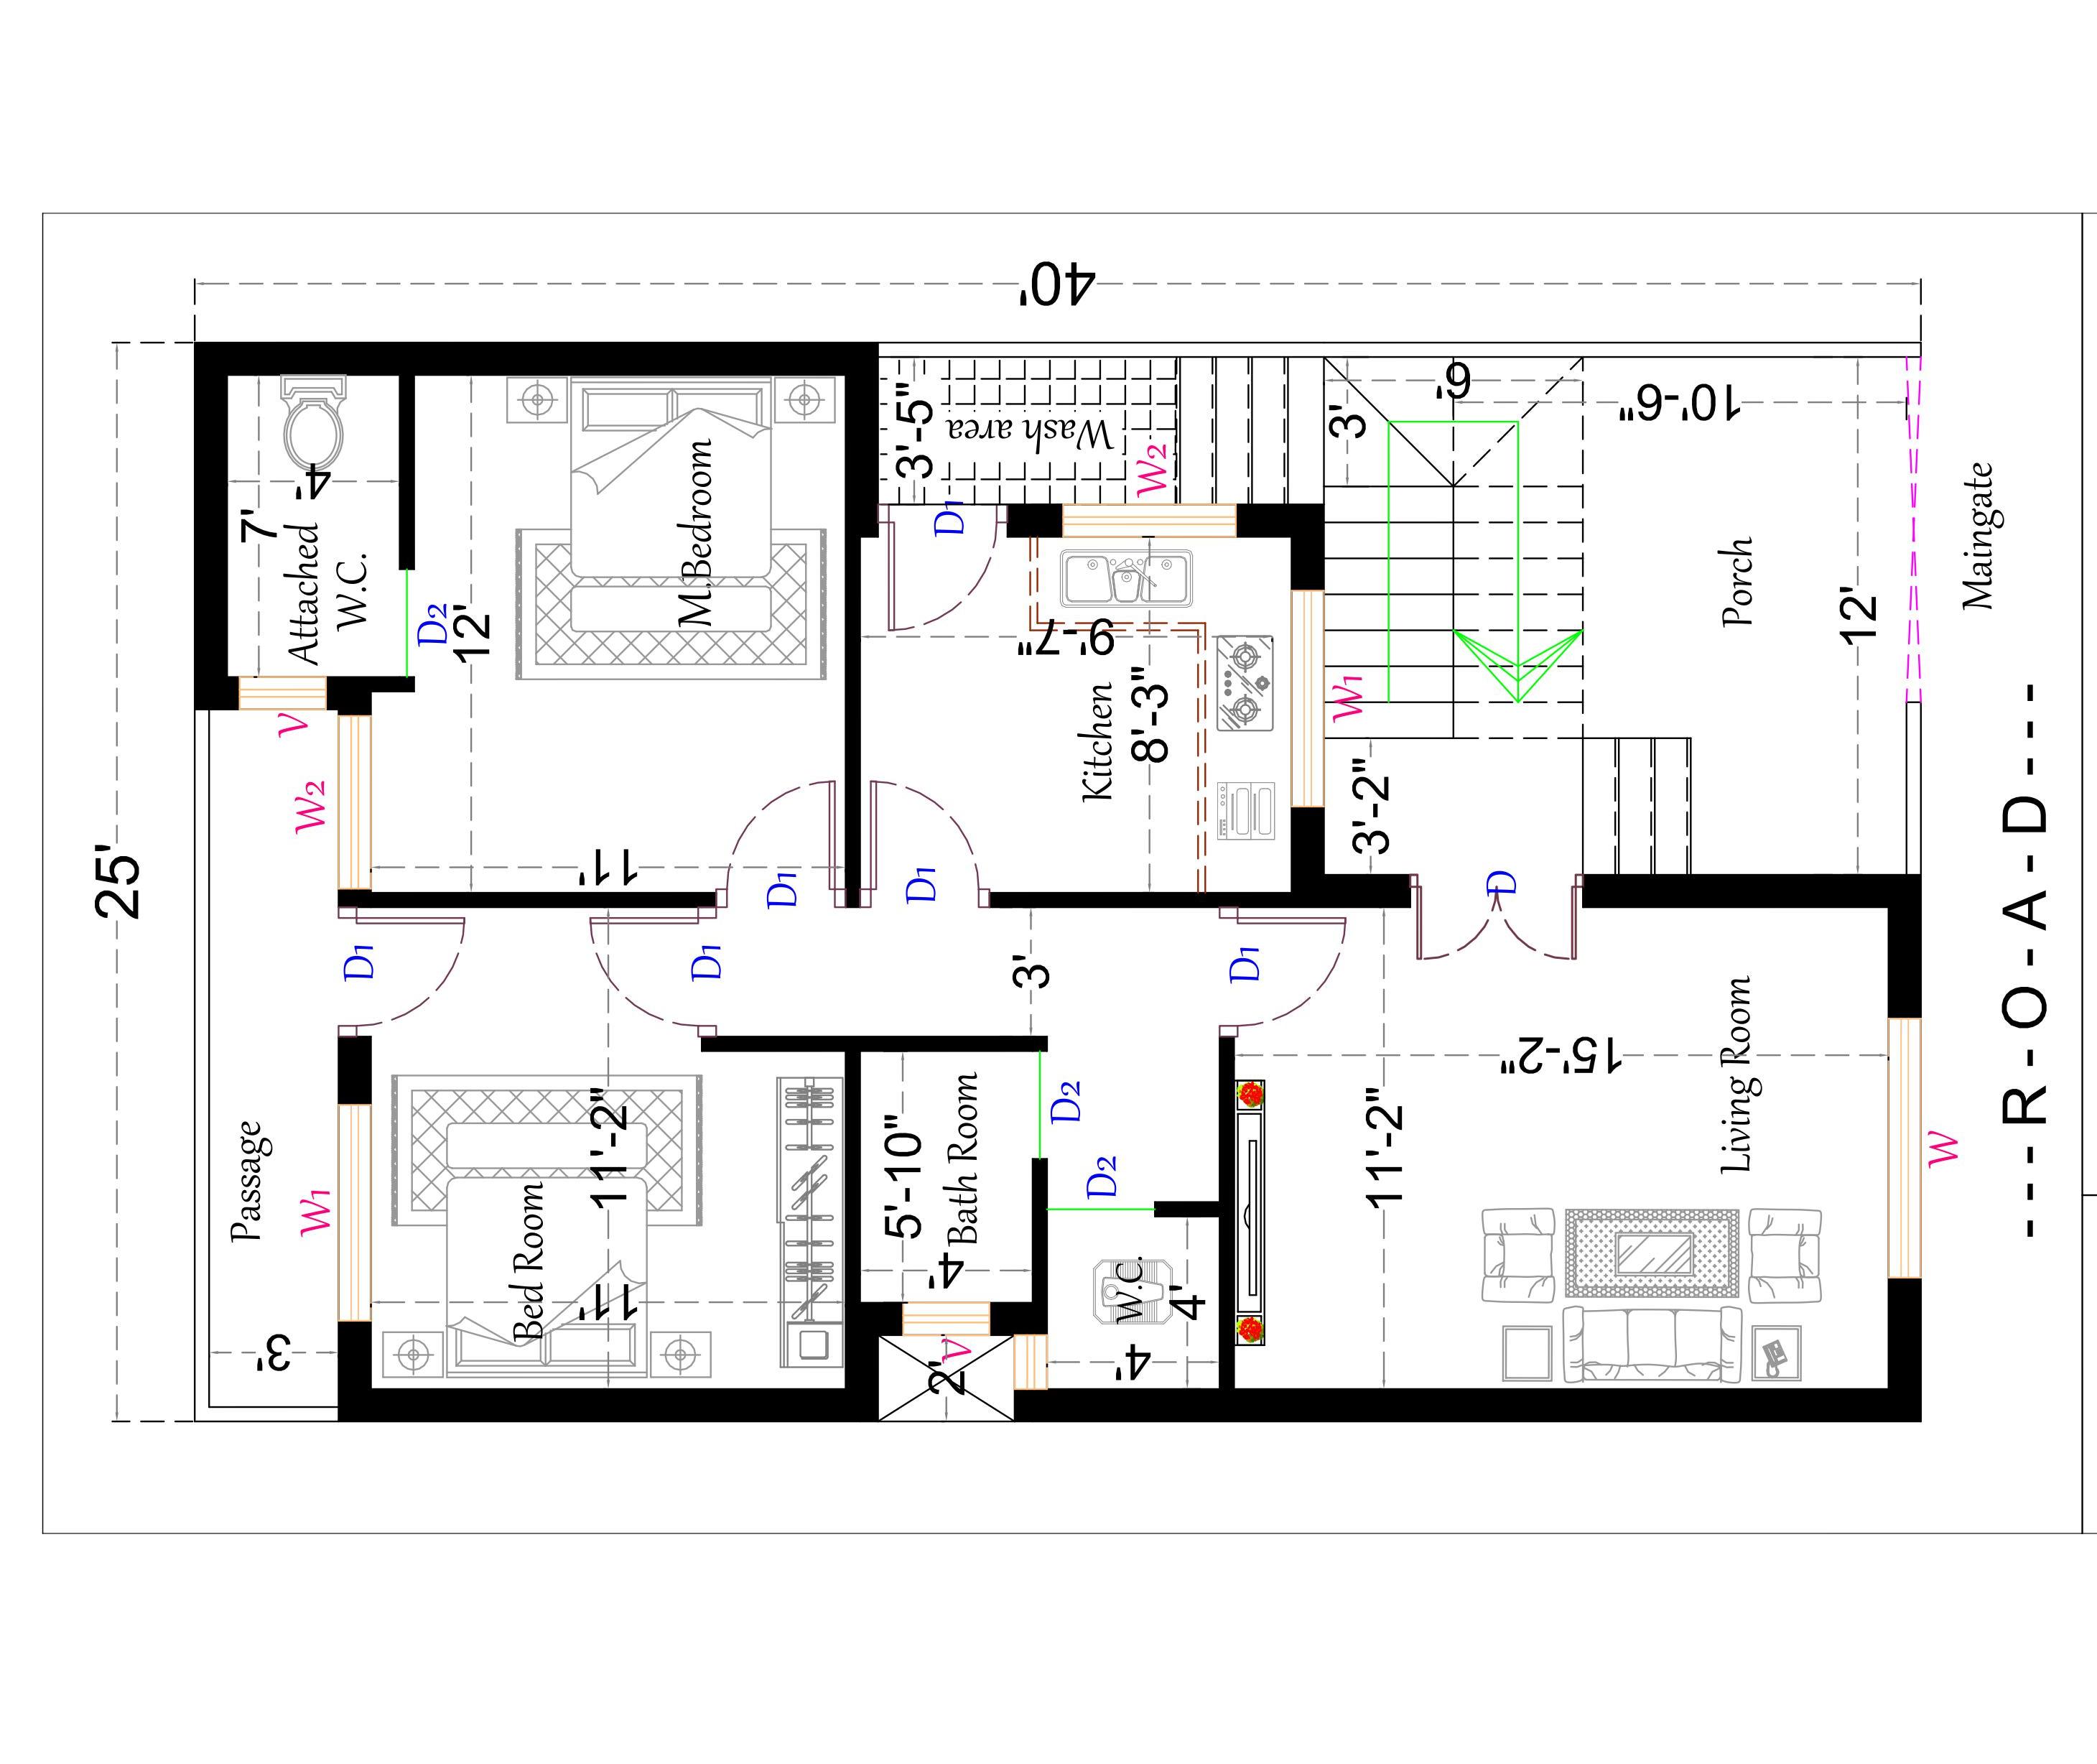  1000  sq  feet  House  Plan  South Facing House  Plan  